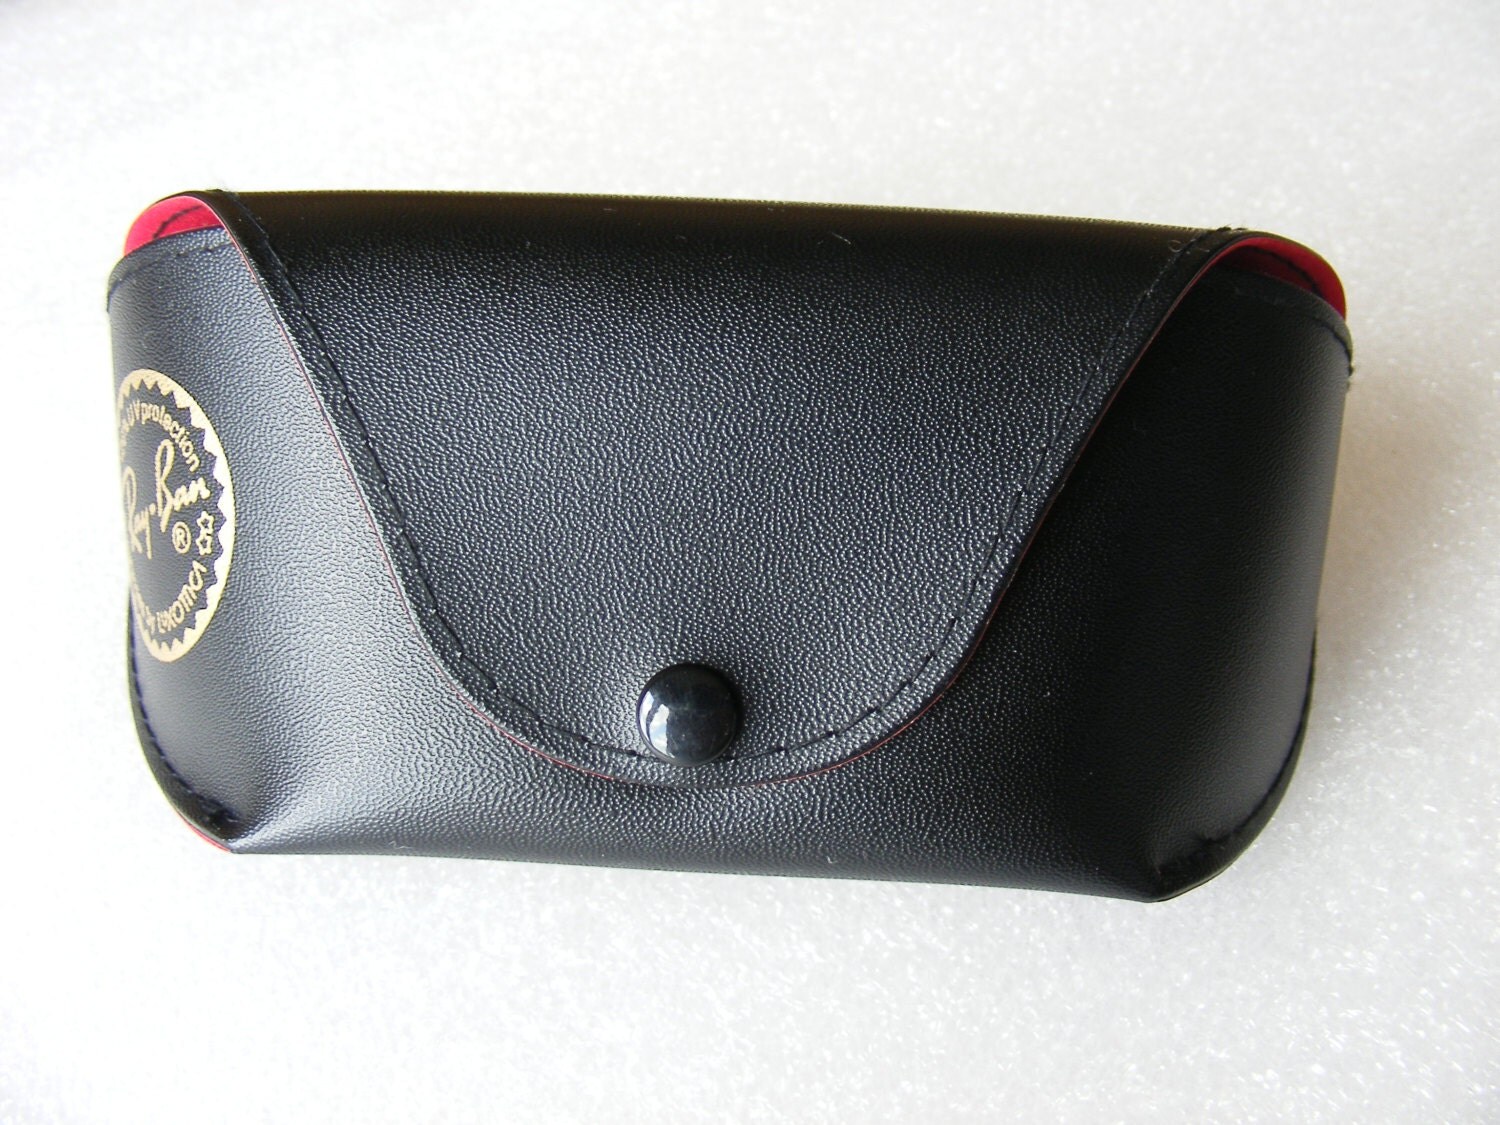 RAY BAN sunglass case storage box soft leather black & red.